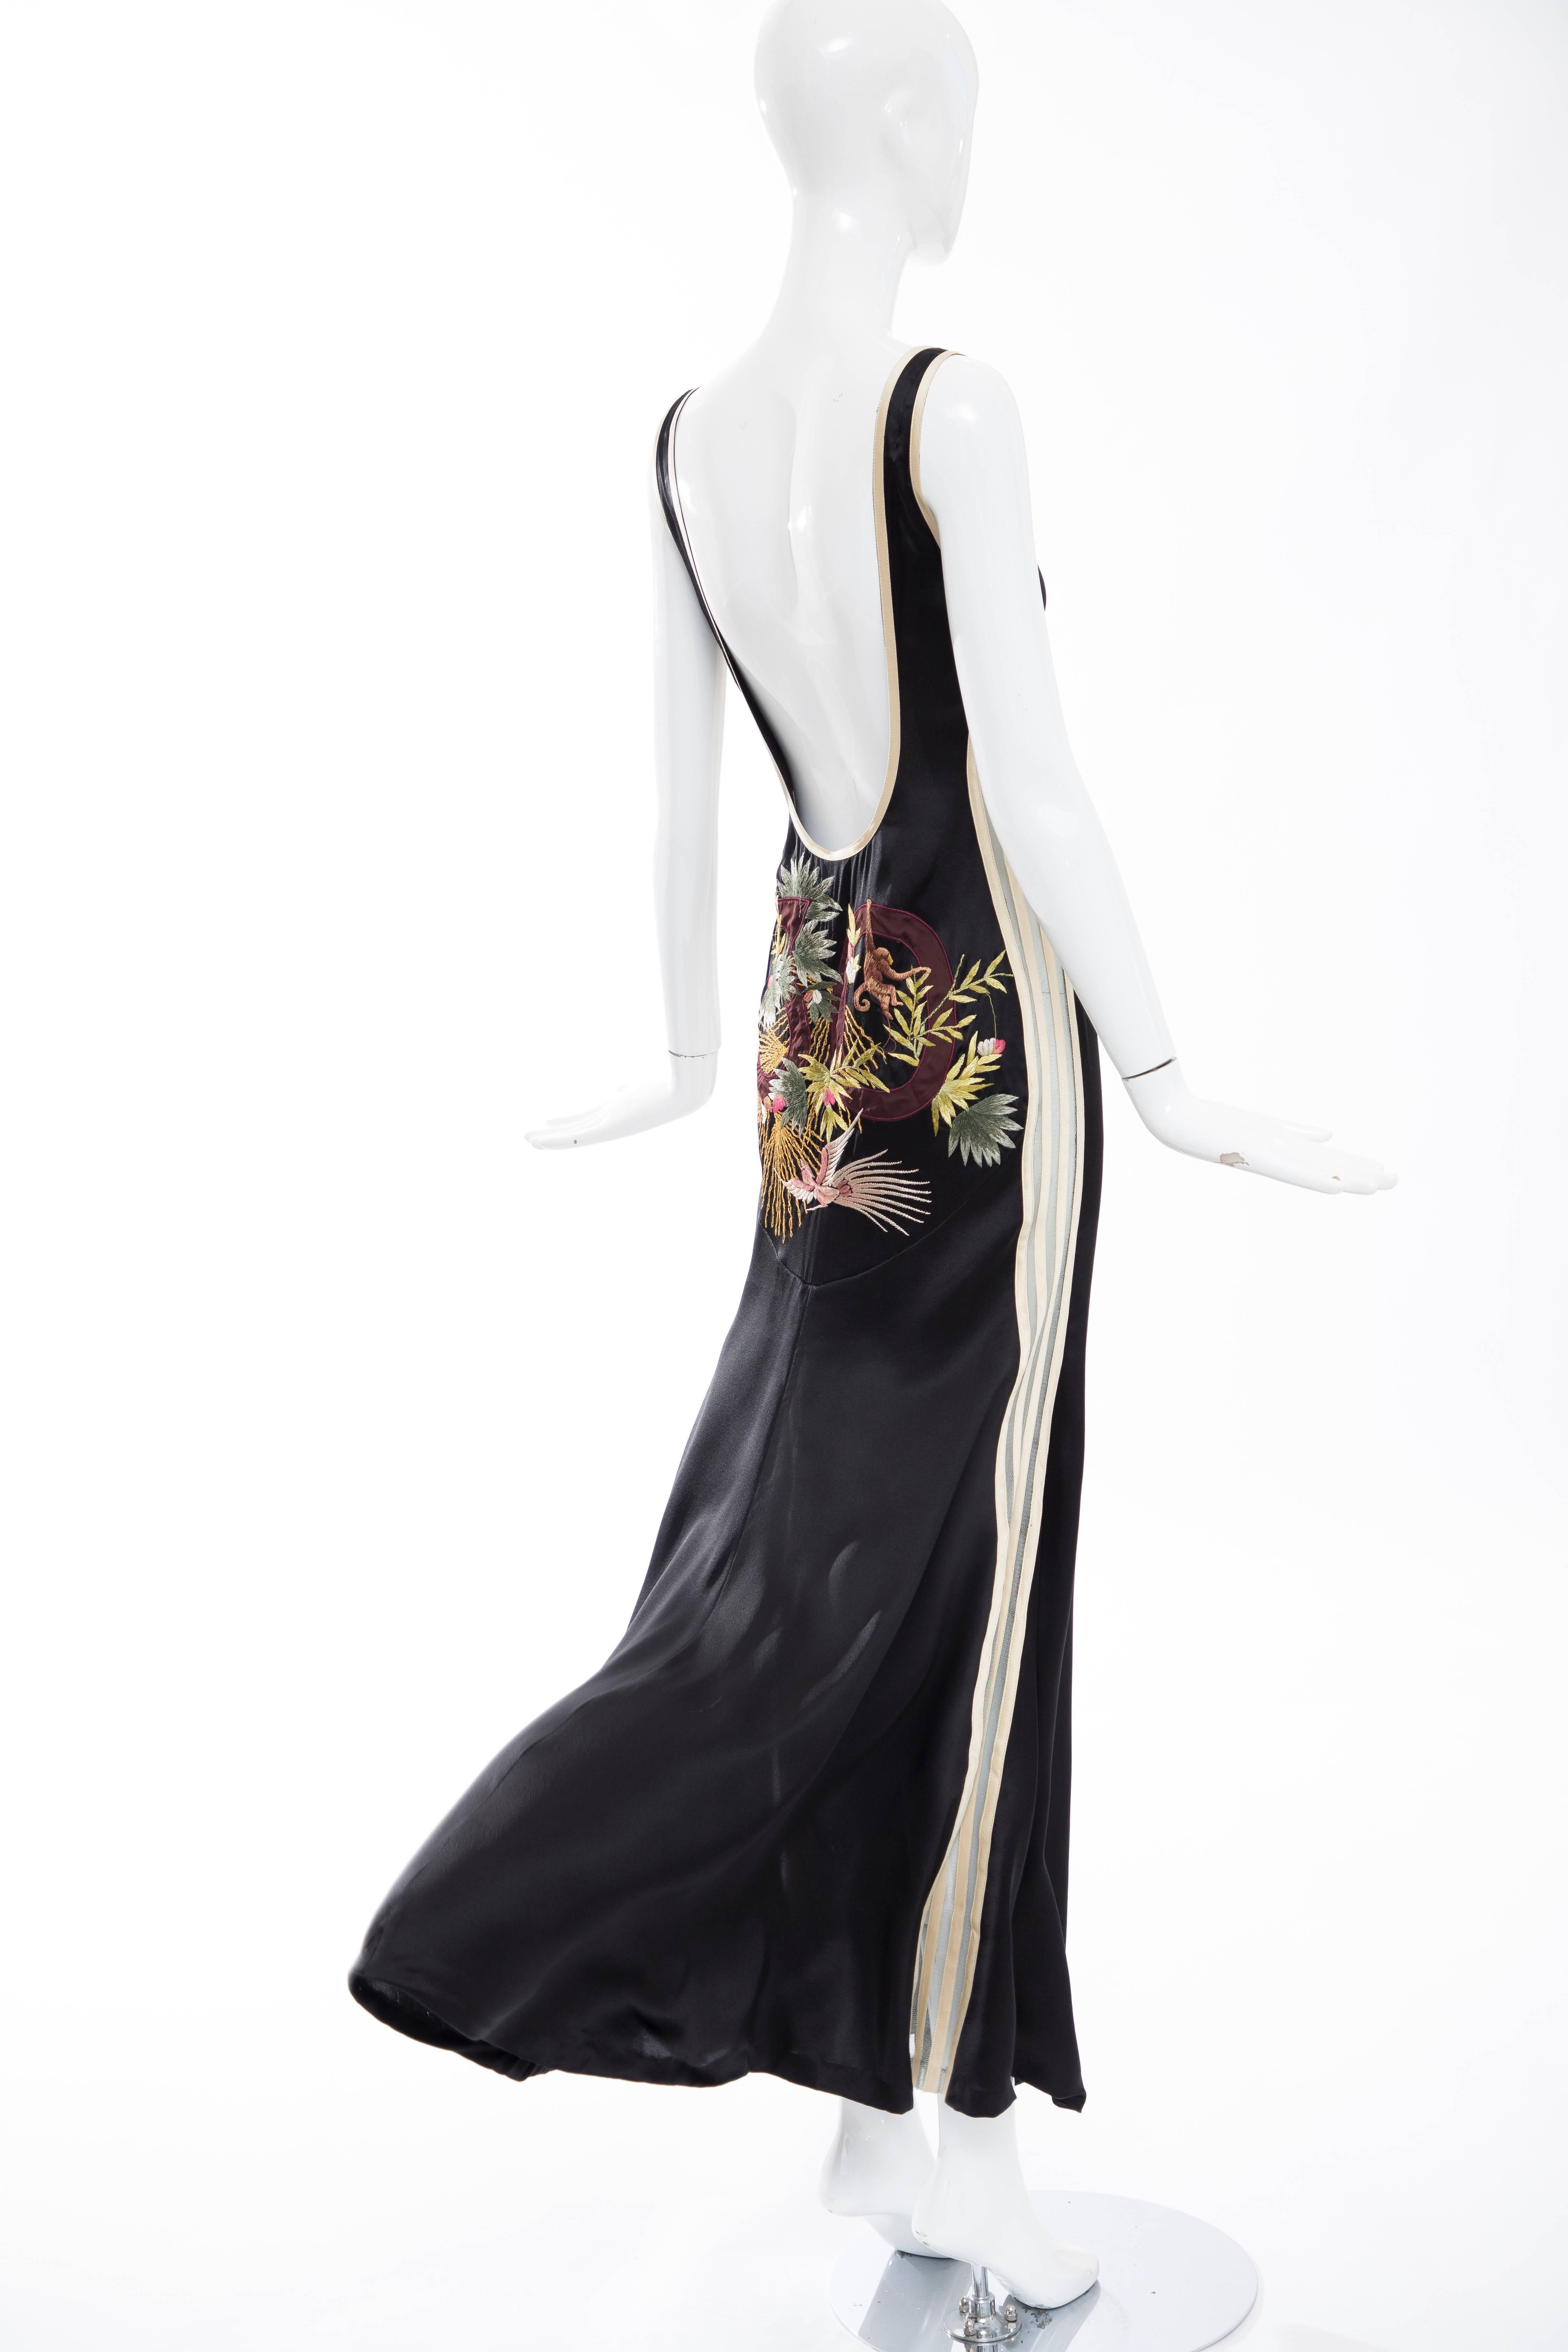 Jean Paul Gaultier Silk Embroidered Evening Dress, Spring 2007 3